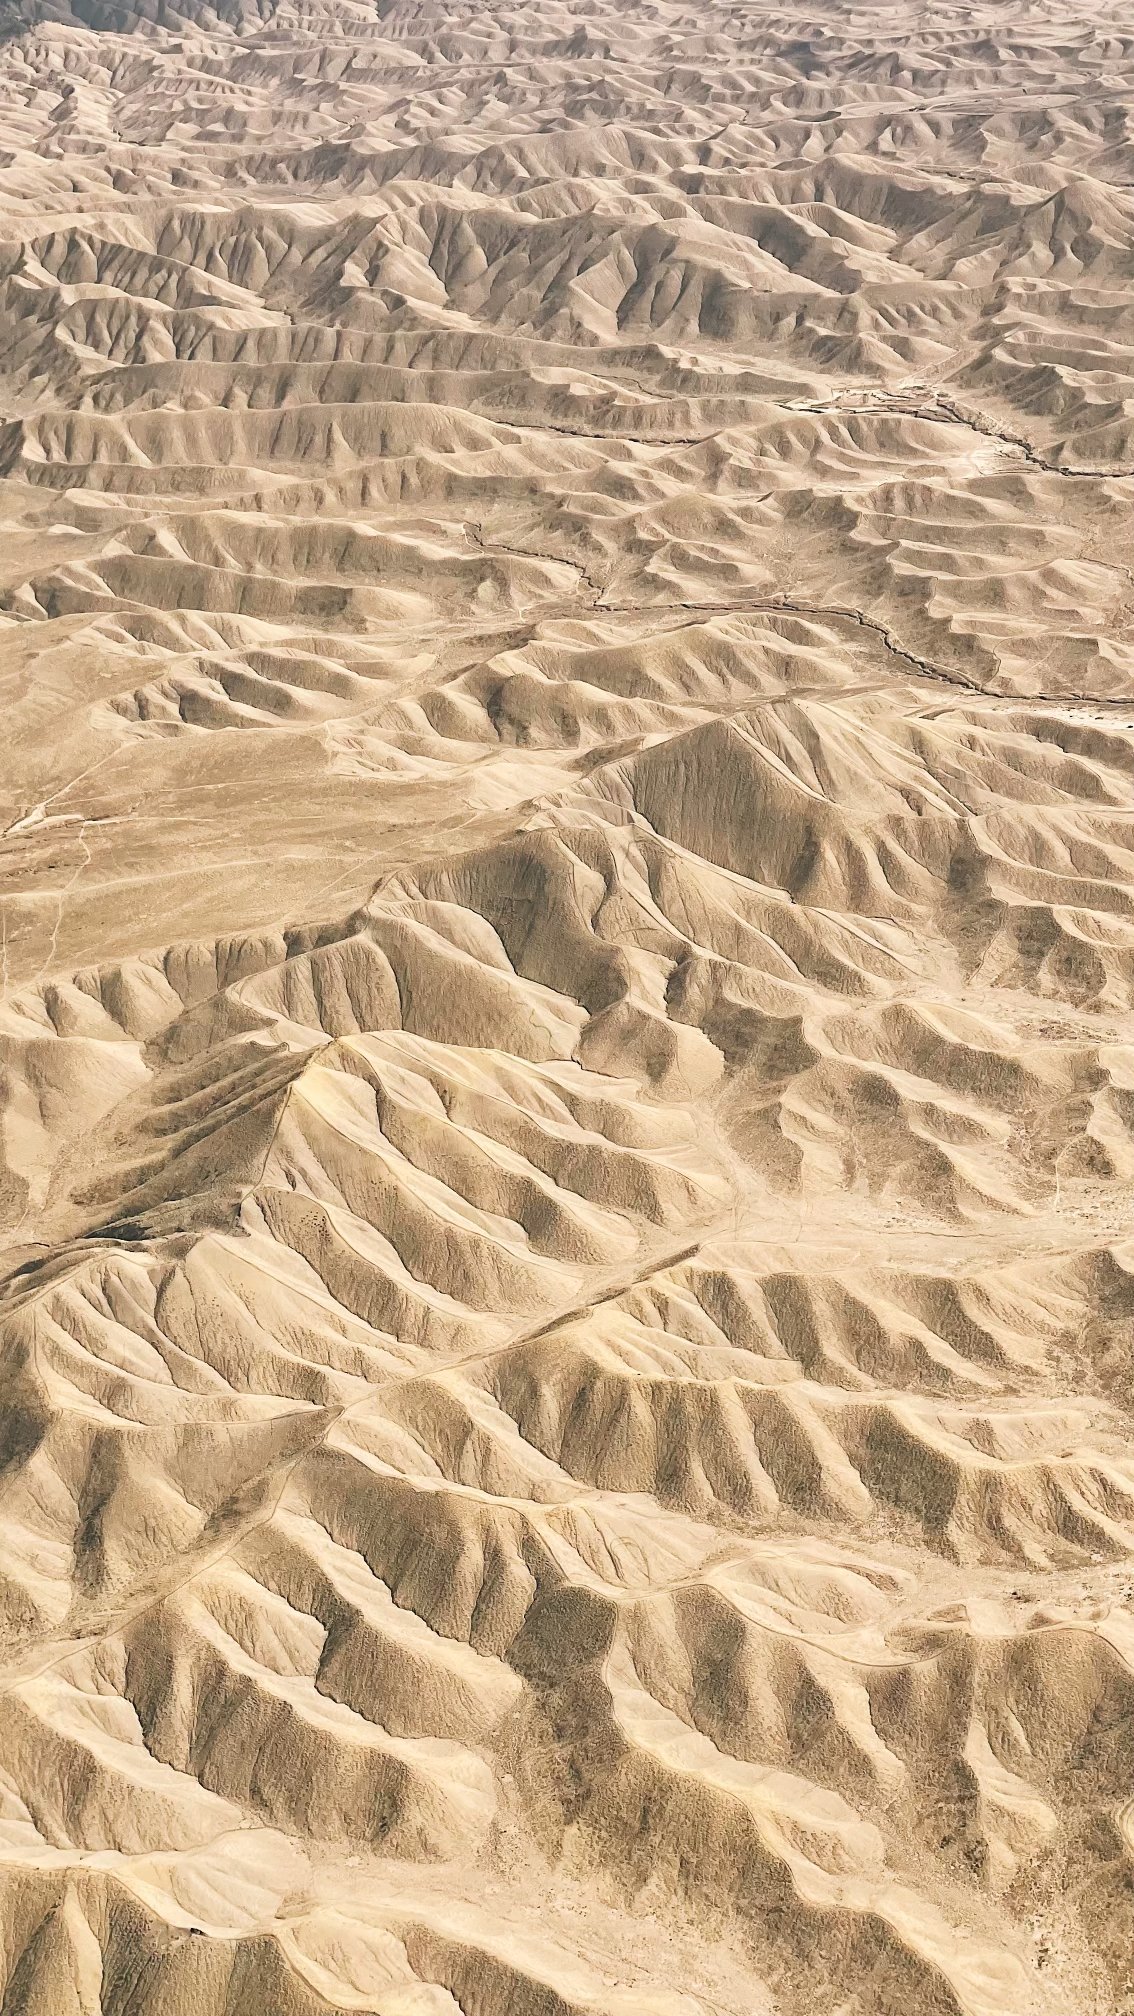 sand-dunes.jpg